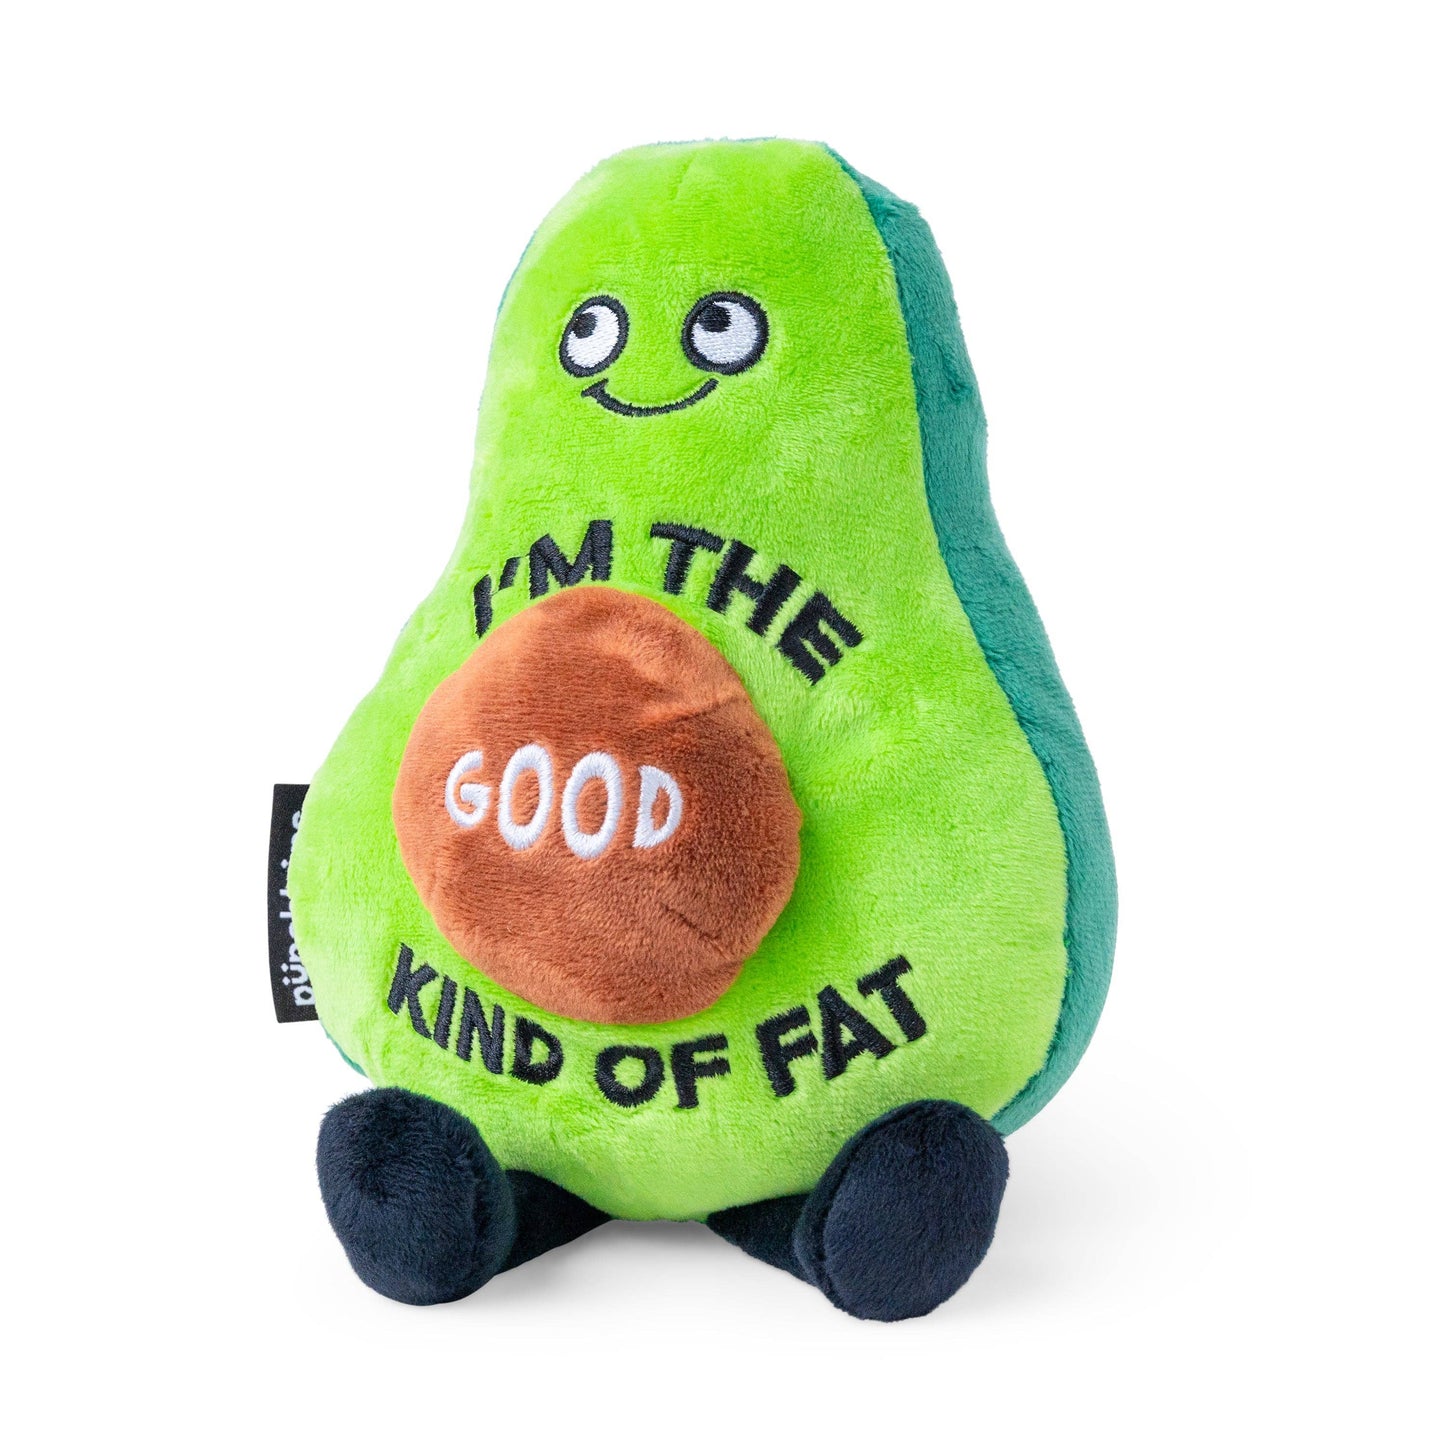 "I'm The Good Kind Of Fat" Novelty Plush Avocado Gift